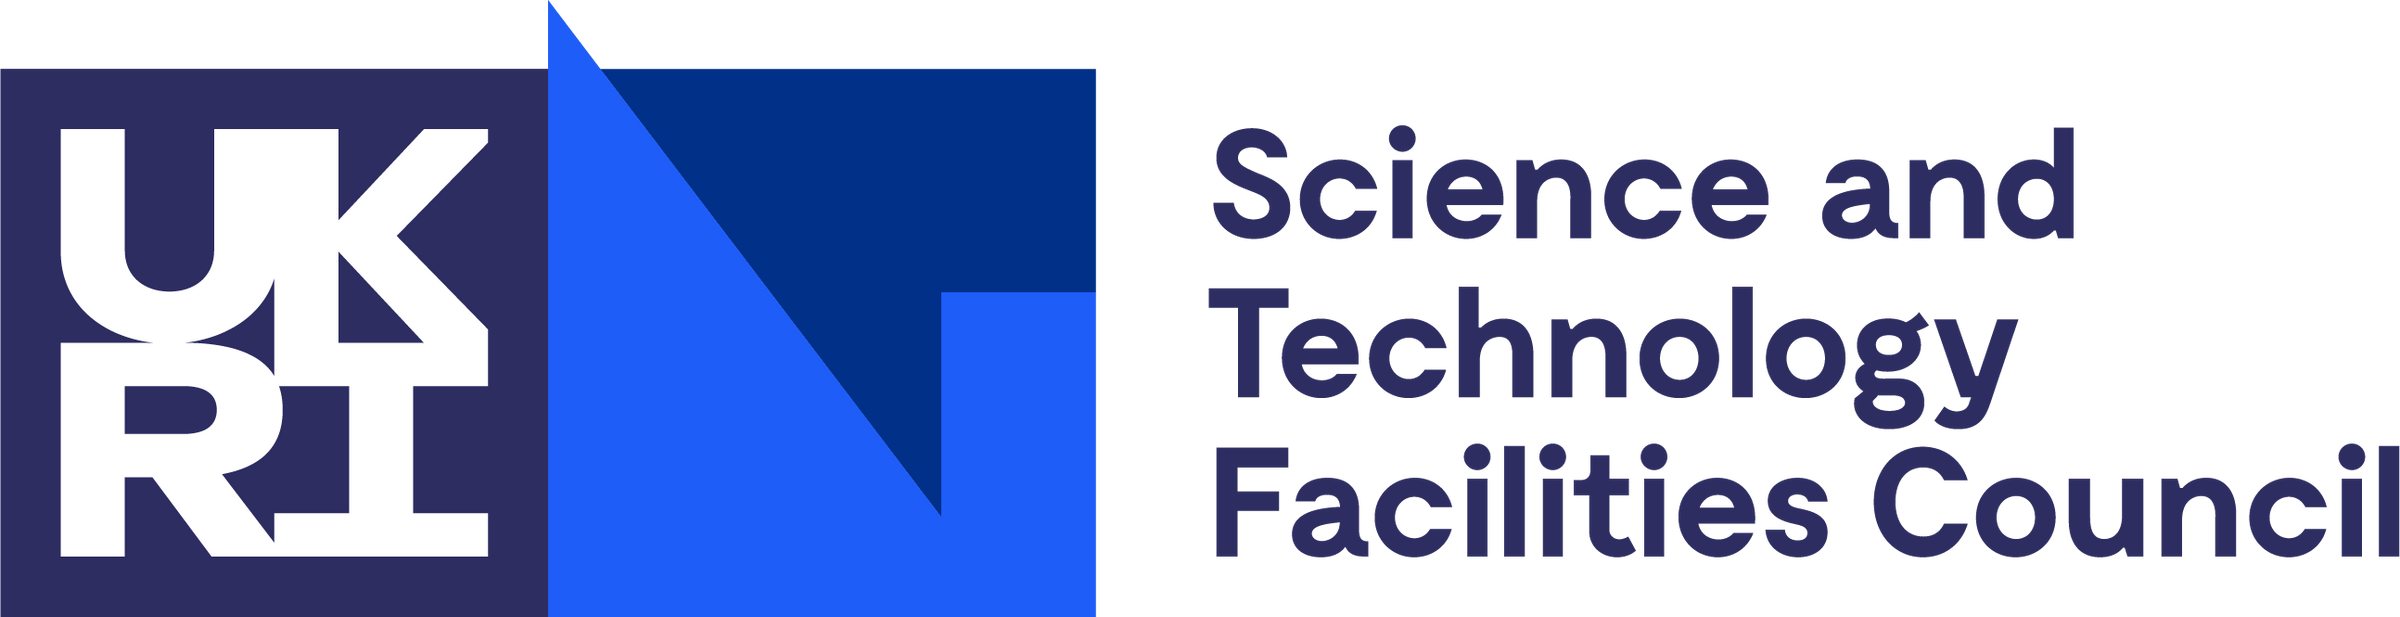 STFC logo - blue.png